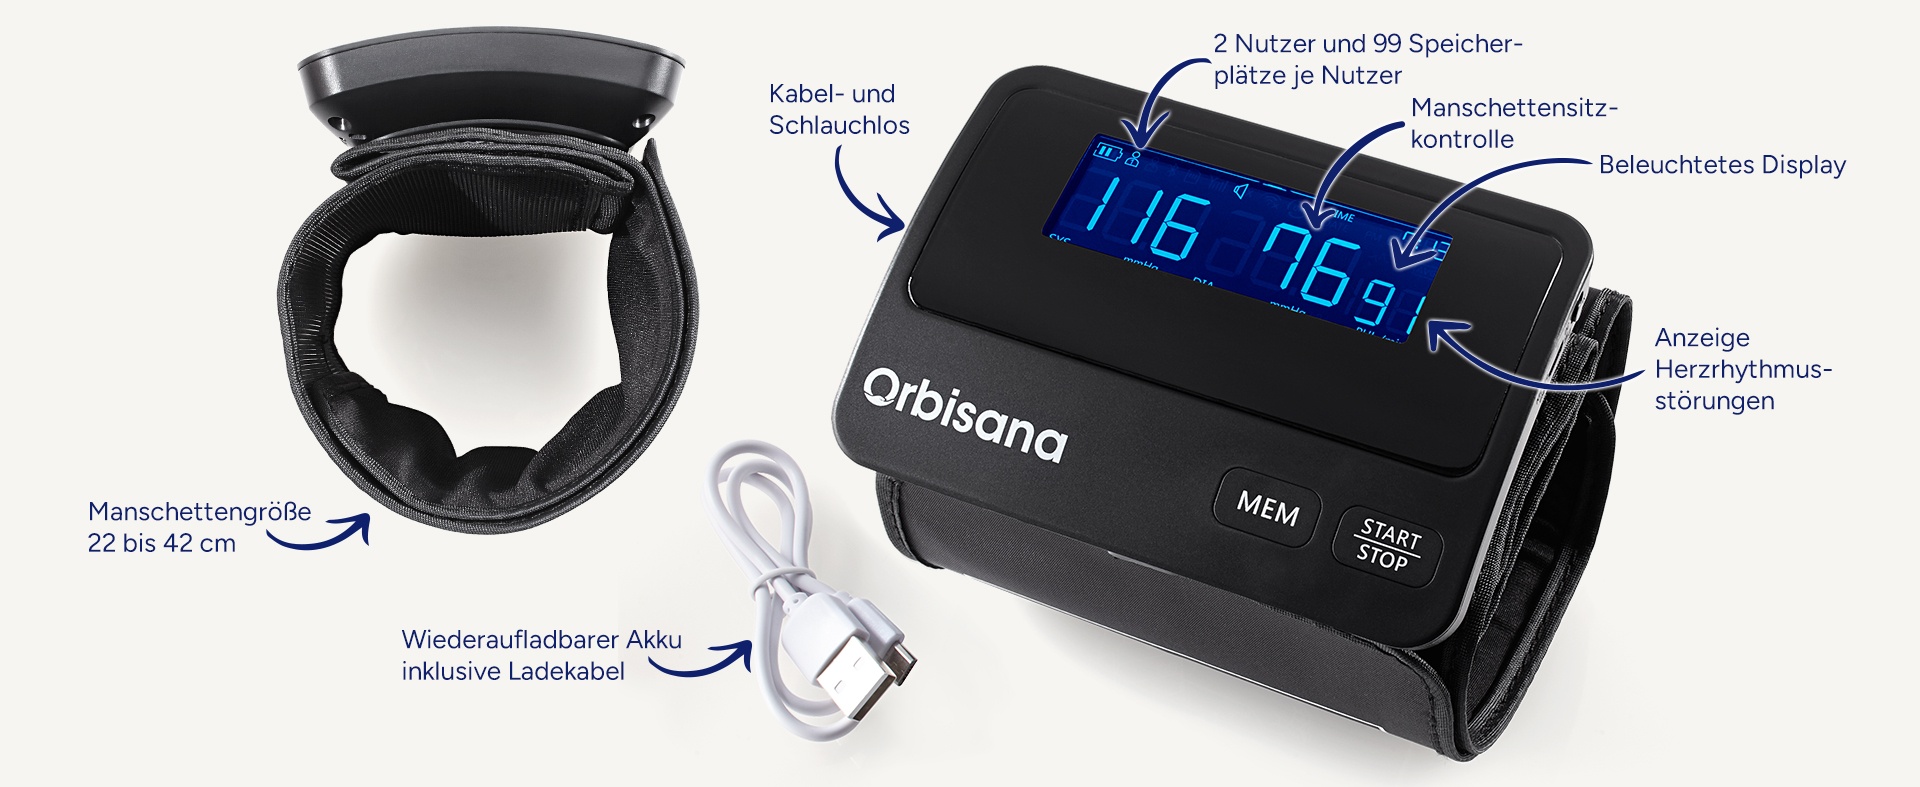 Orbisana BDO 350 Blutdruckmessgerät ONE im Überblick